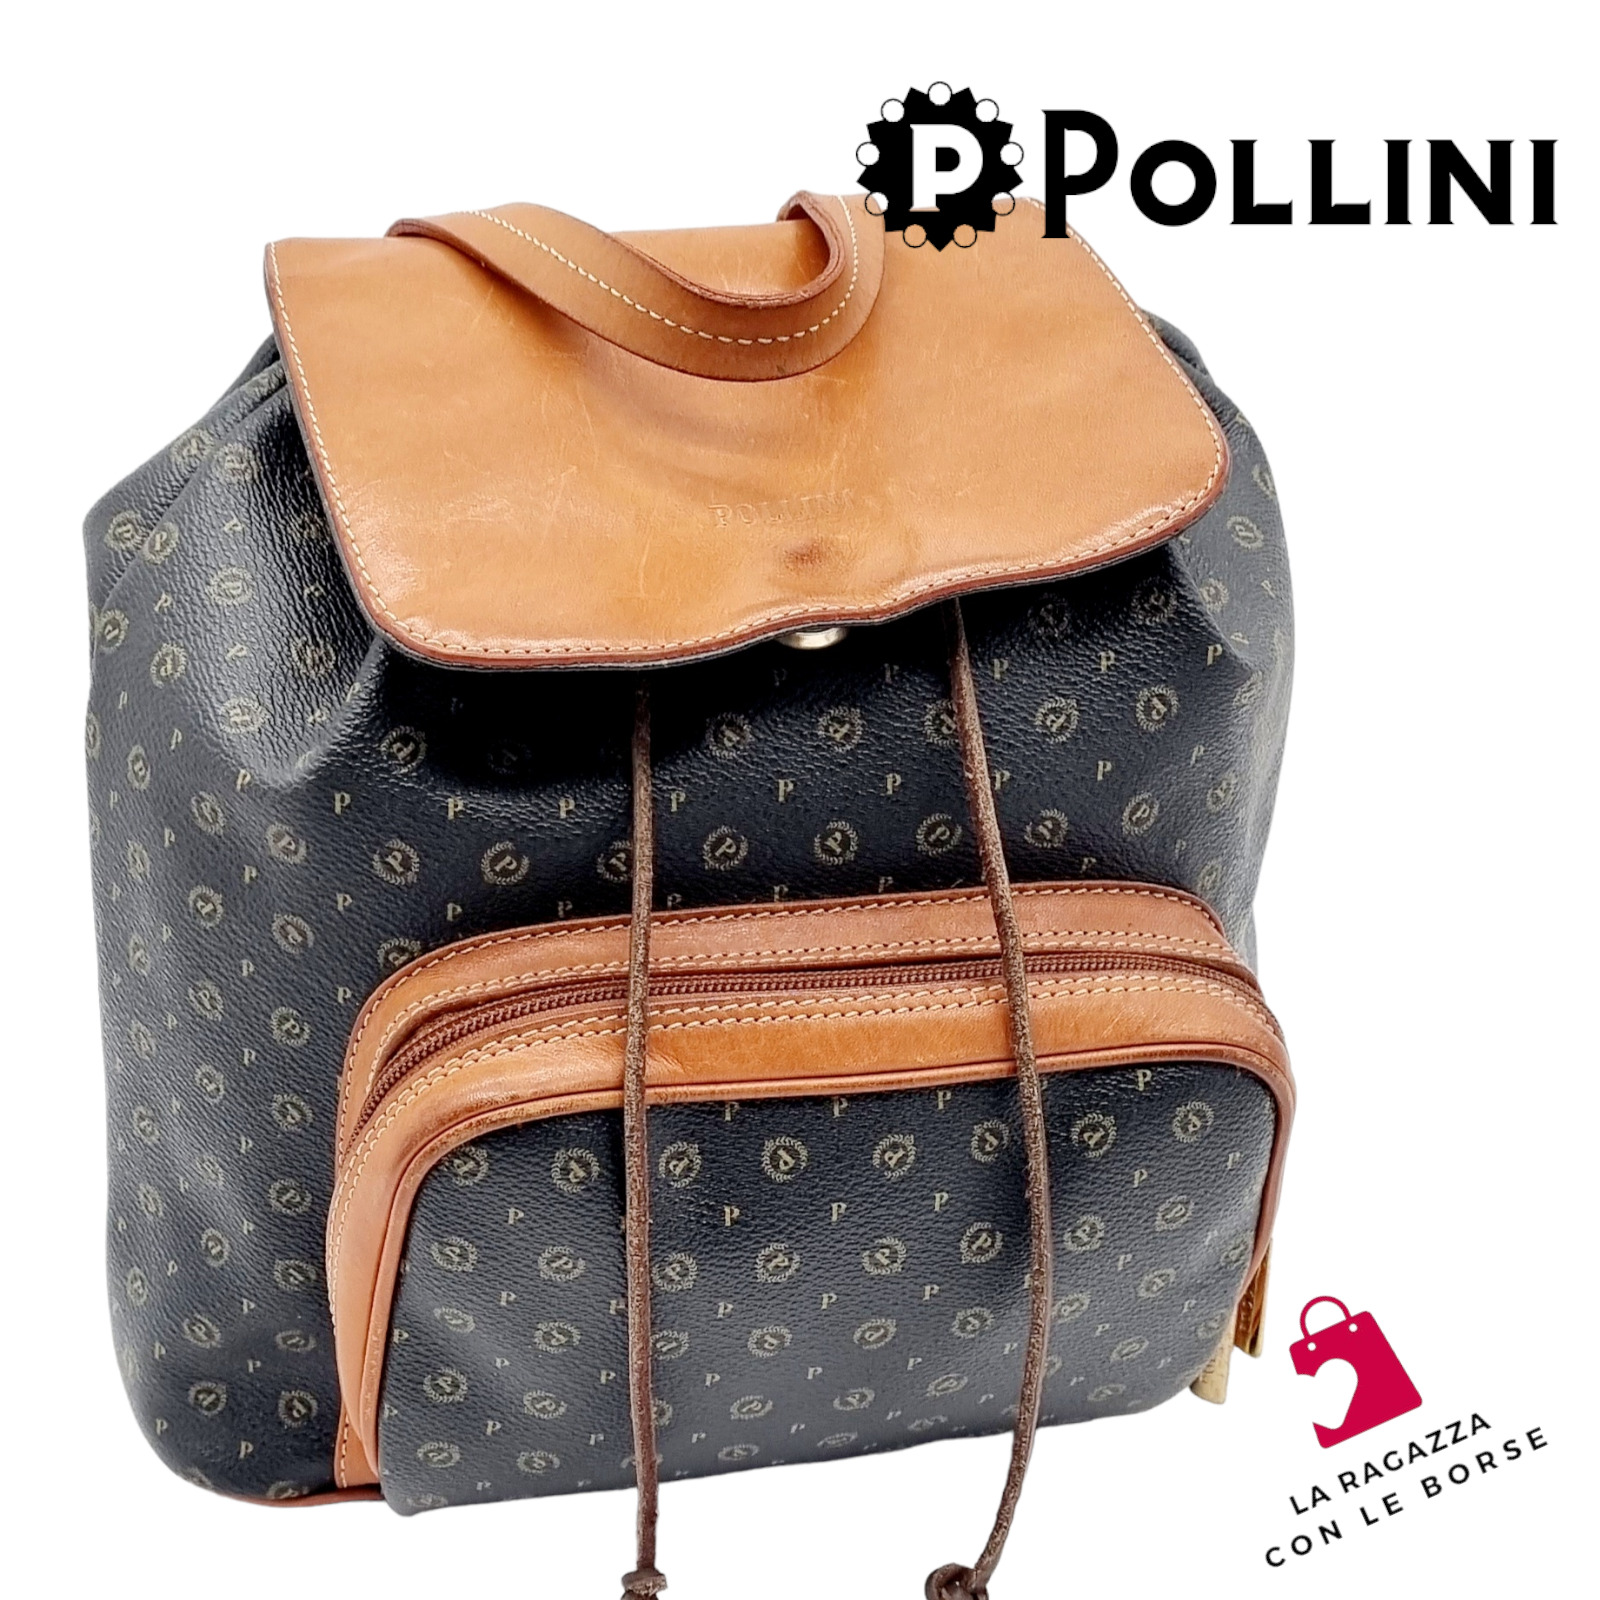 Borsa Zaino Pollini Donna Vintage Pelle Handbag made in italy bourse regolabile